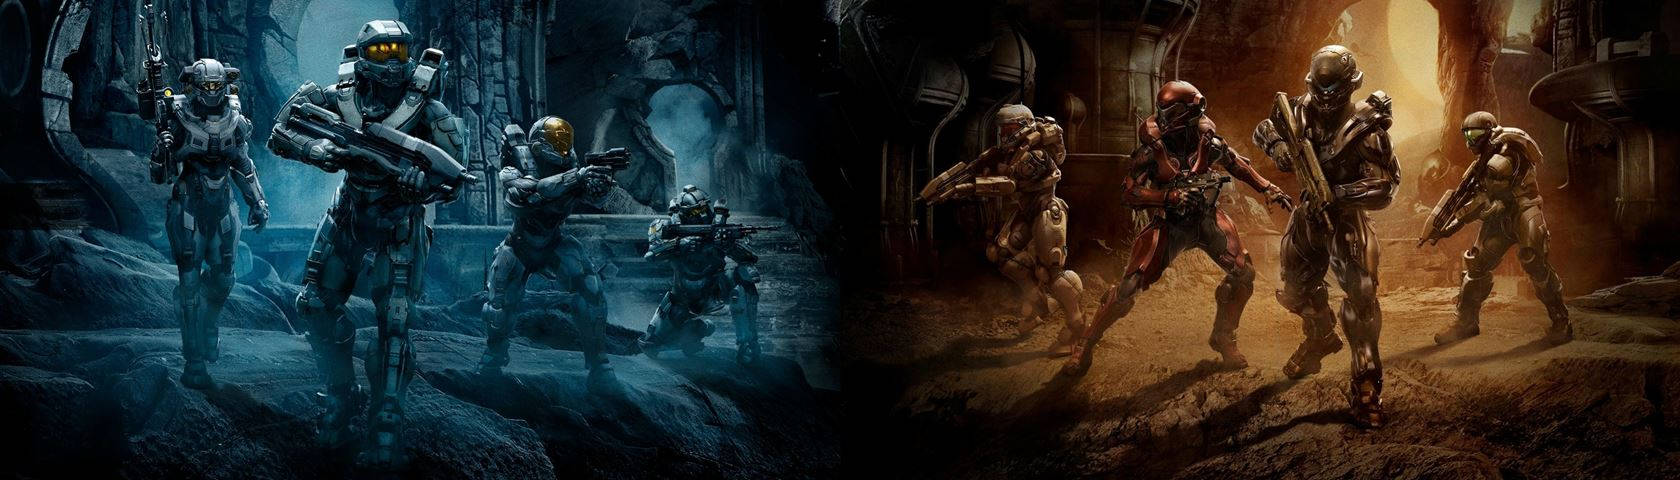 Halo 5 Guardians Dual Screen